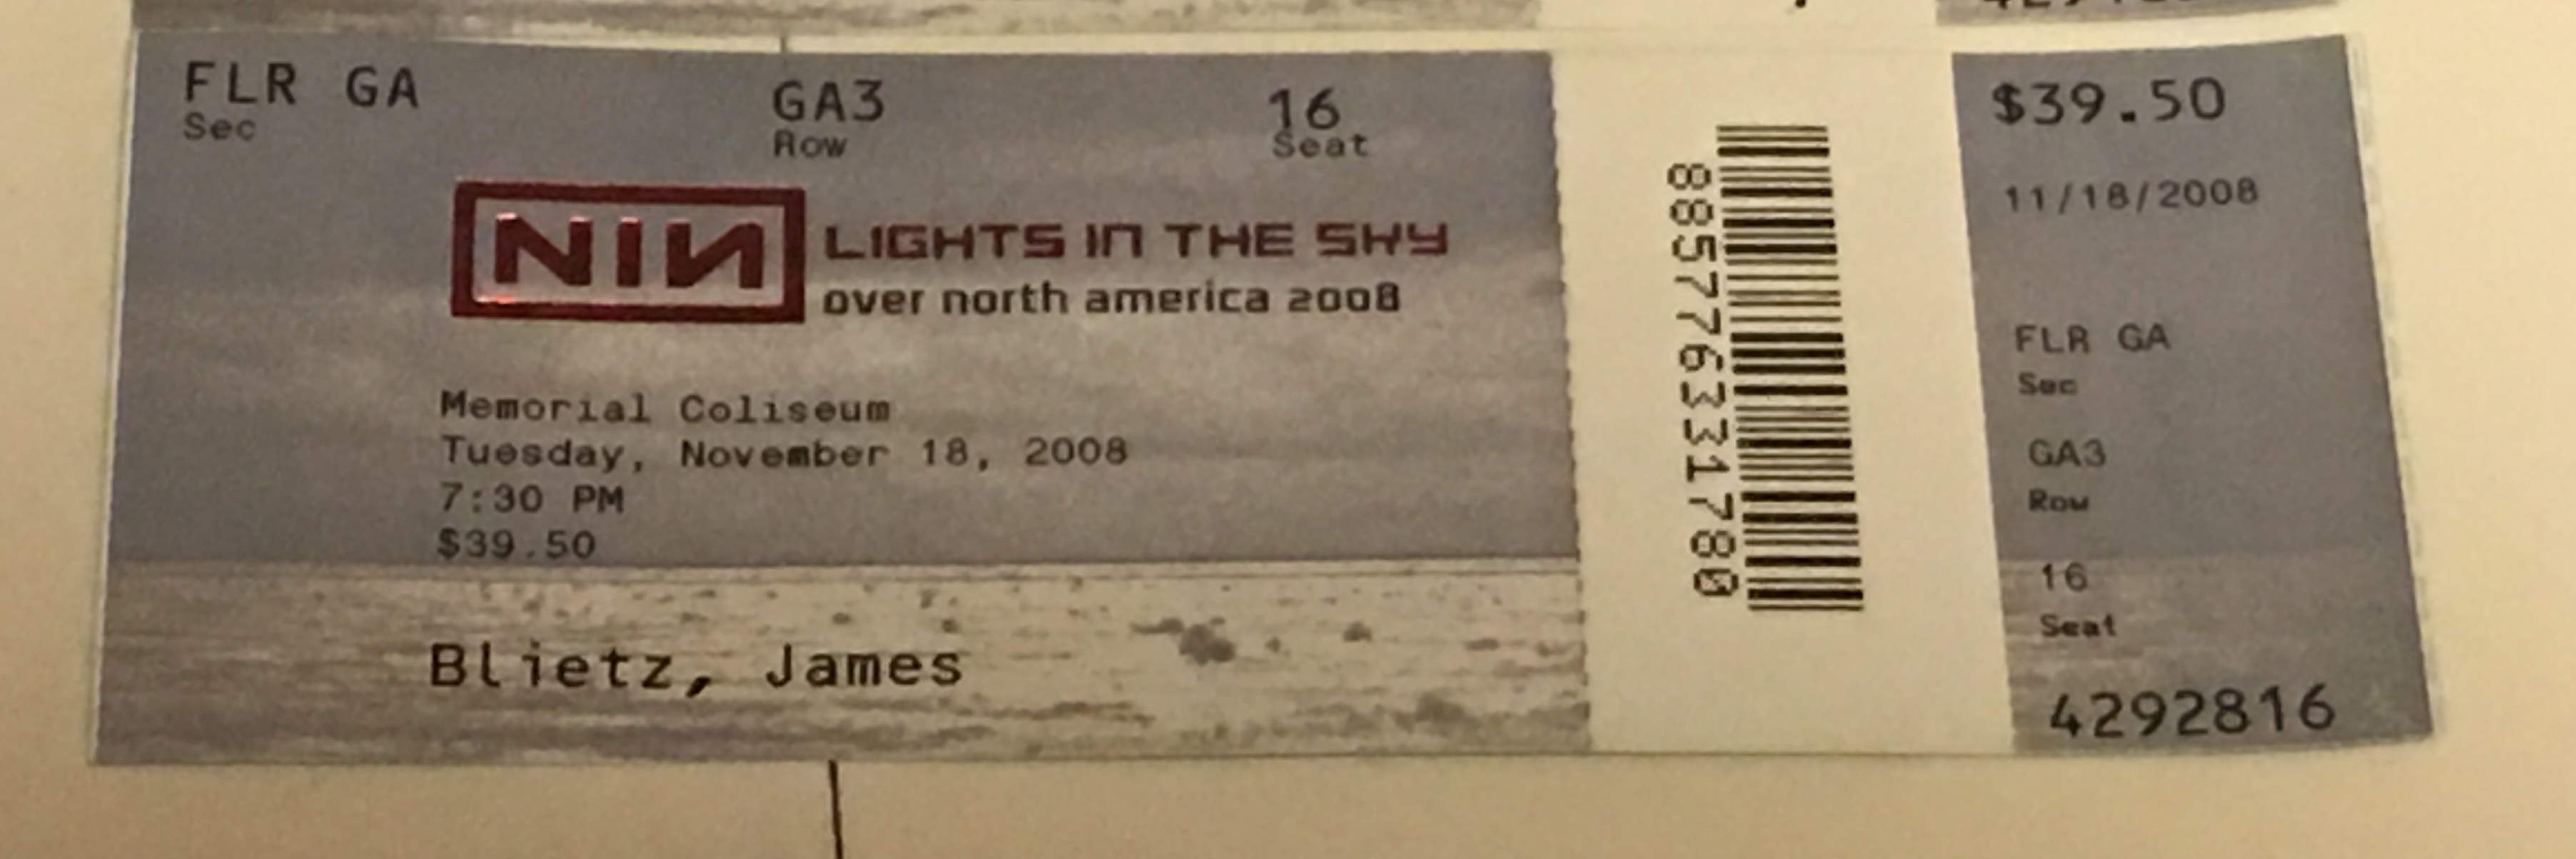 2008/11/18 Ticket